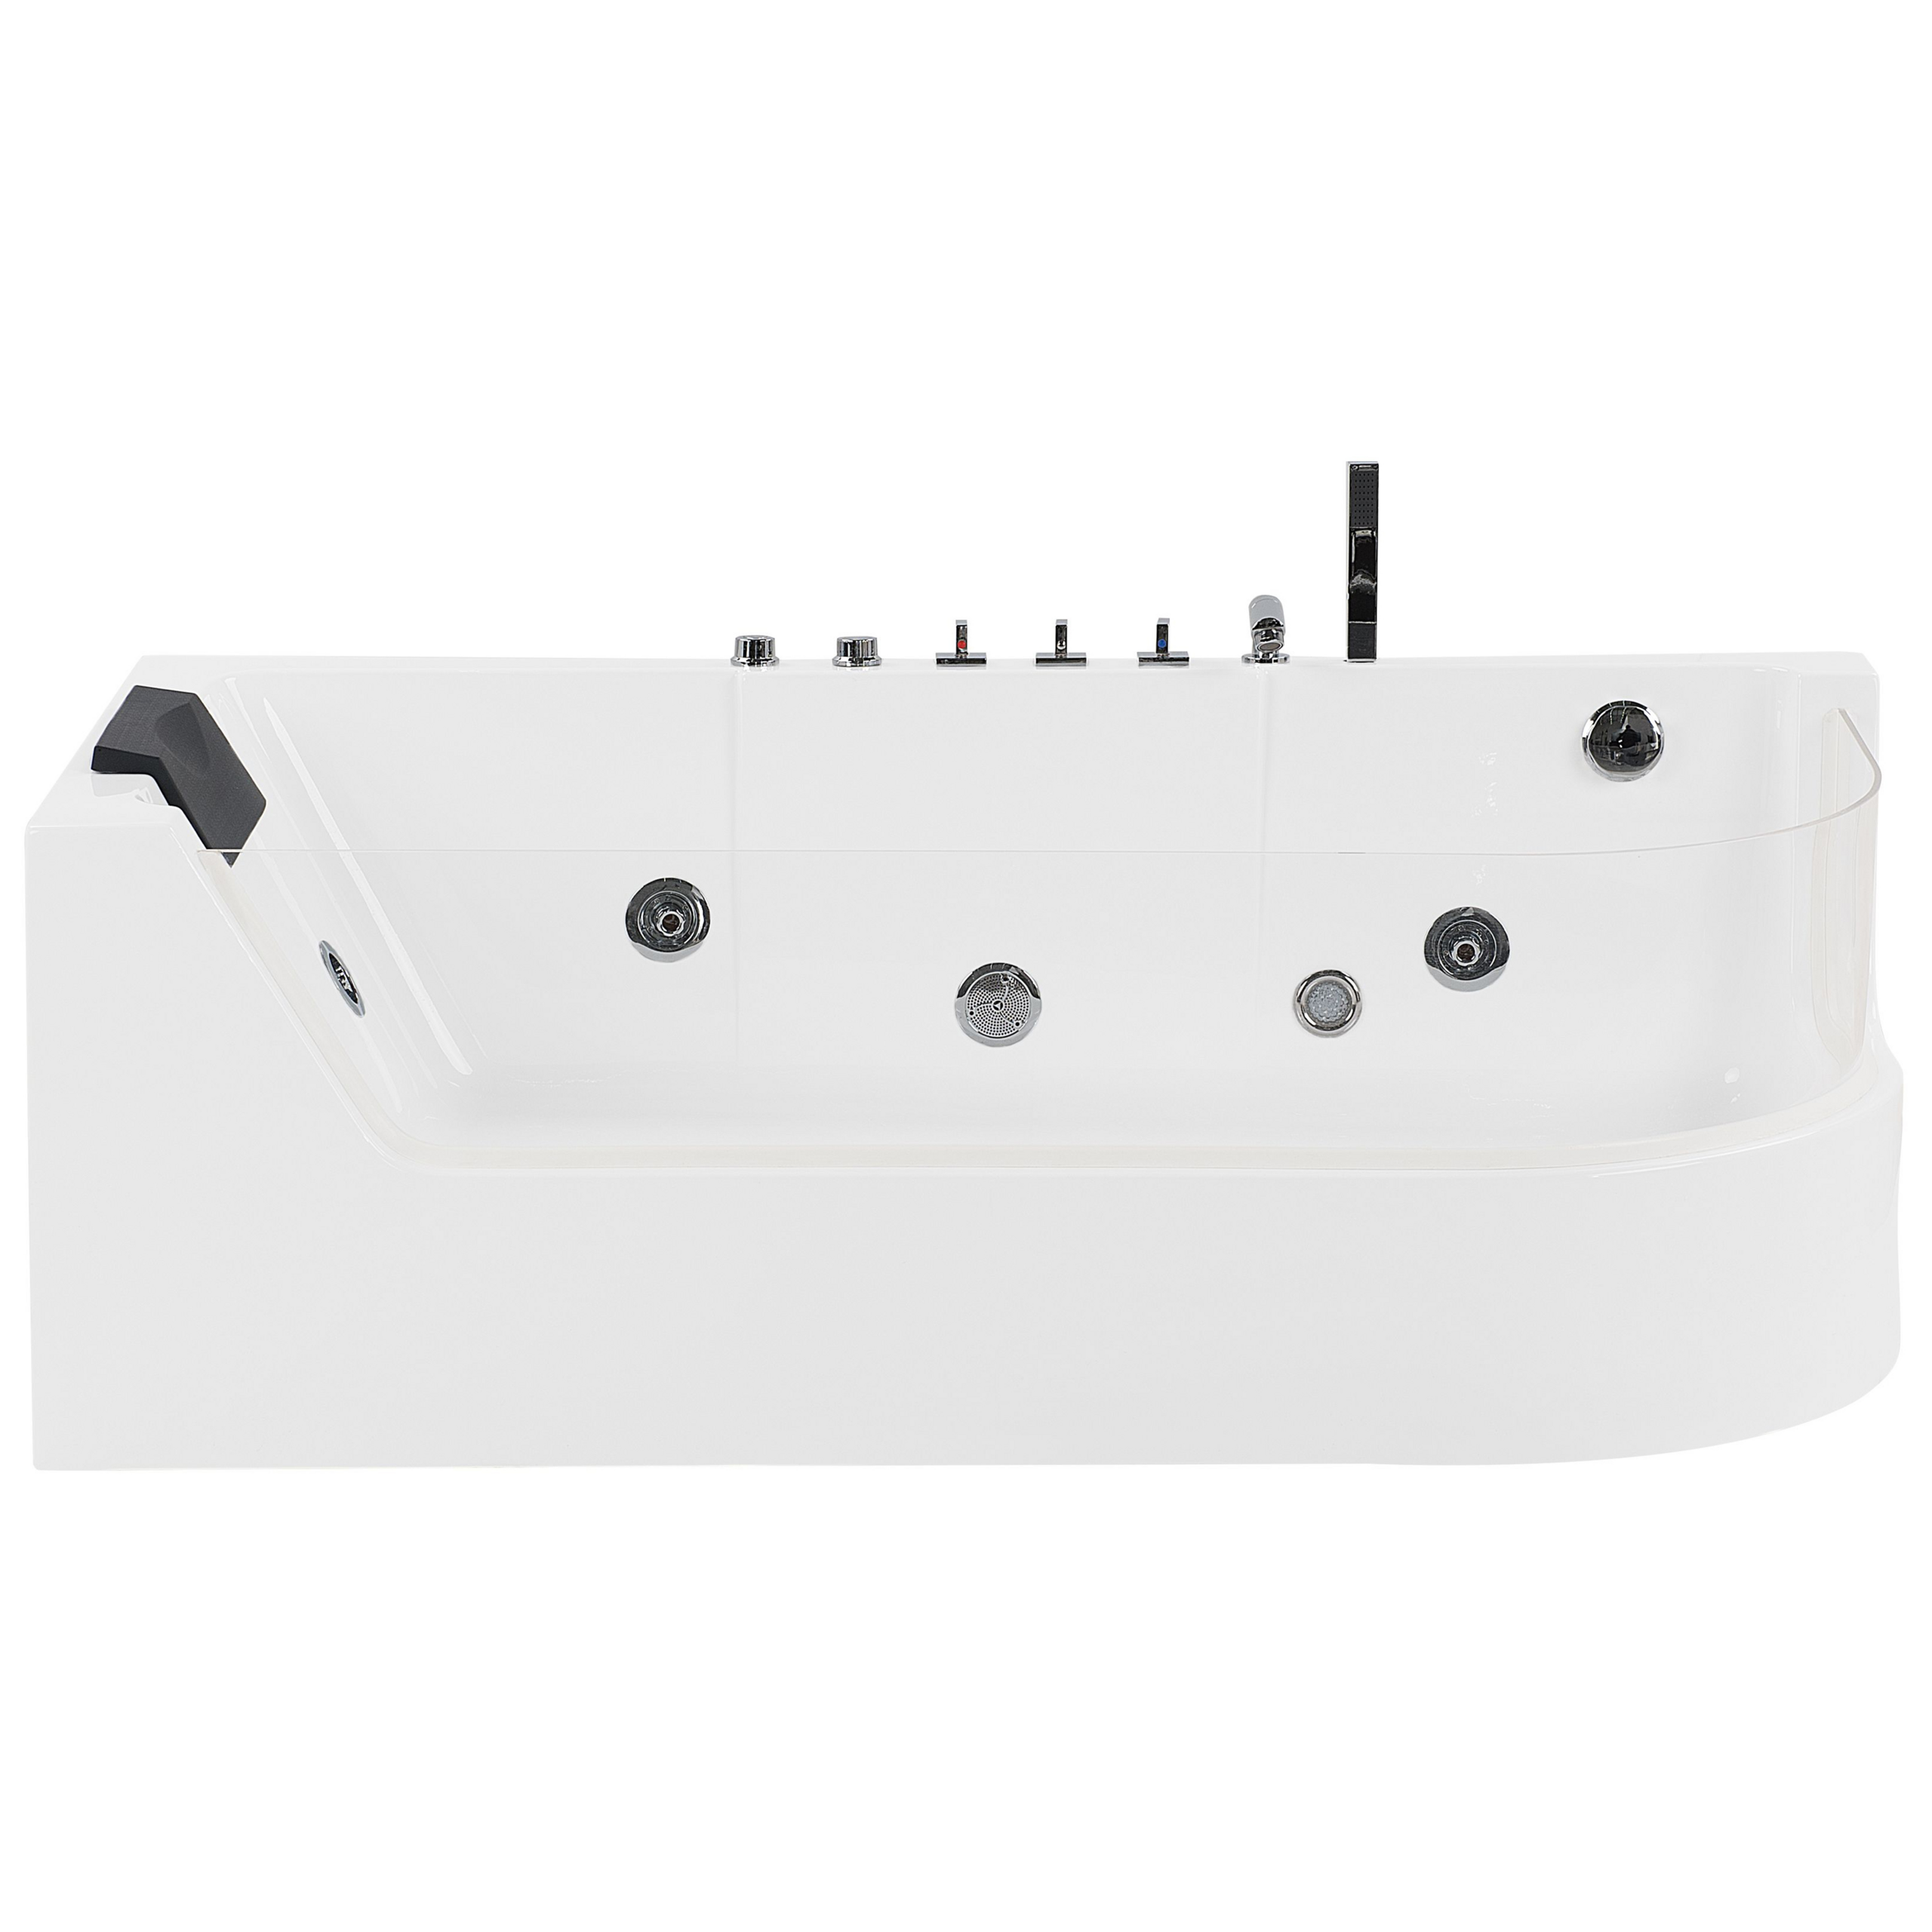 Beliani Whirlpool Bath White Sanitary Acrylic Glass Front Faux Leather Headrest LED Illumination Single 170 x 85 cm Curved Design